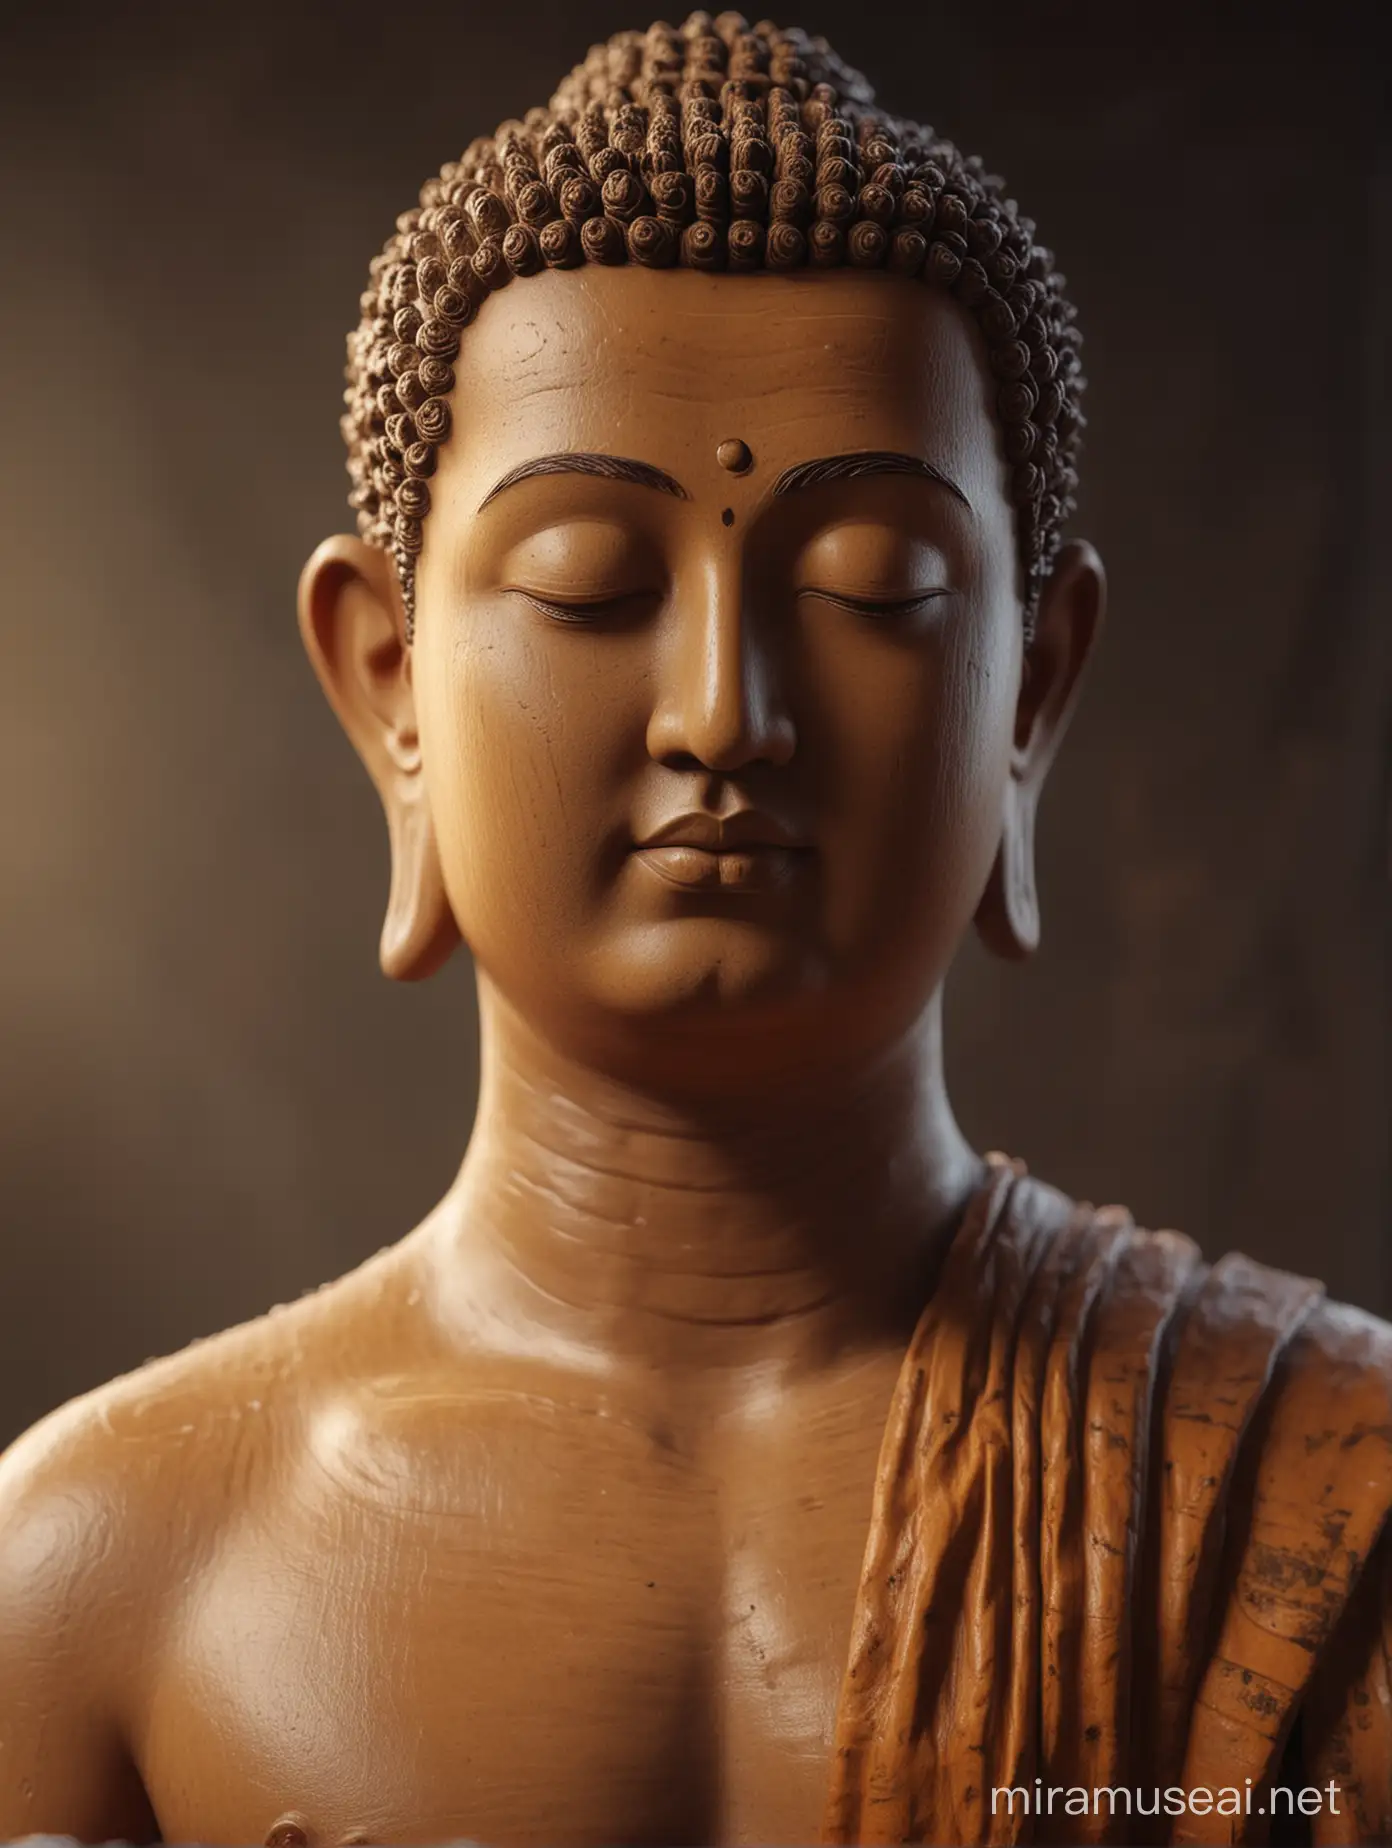 Serene Buddha Meditating in Realistic Light